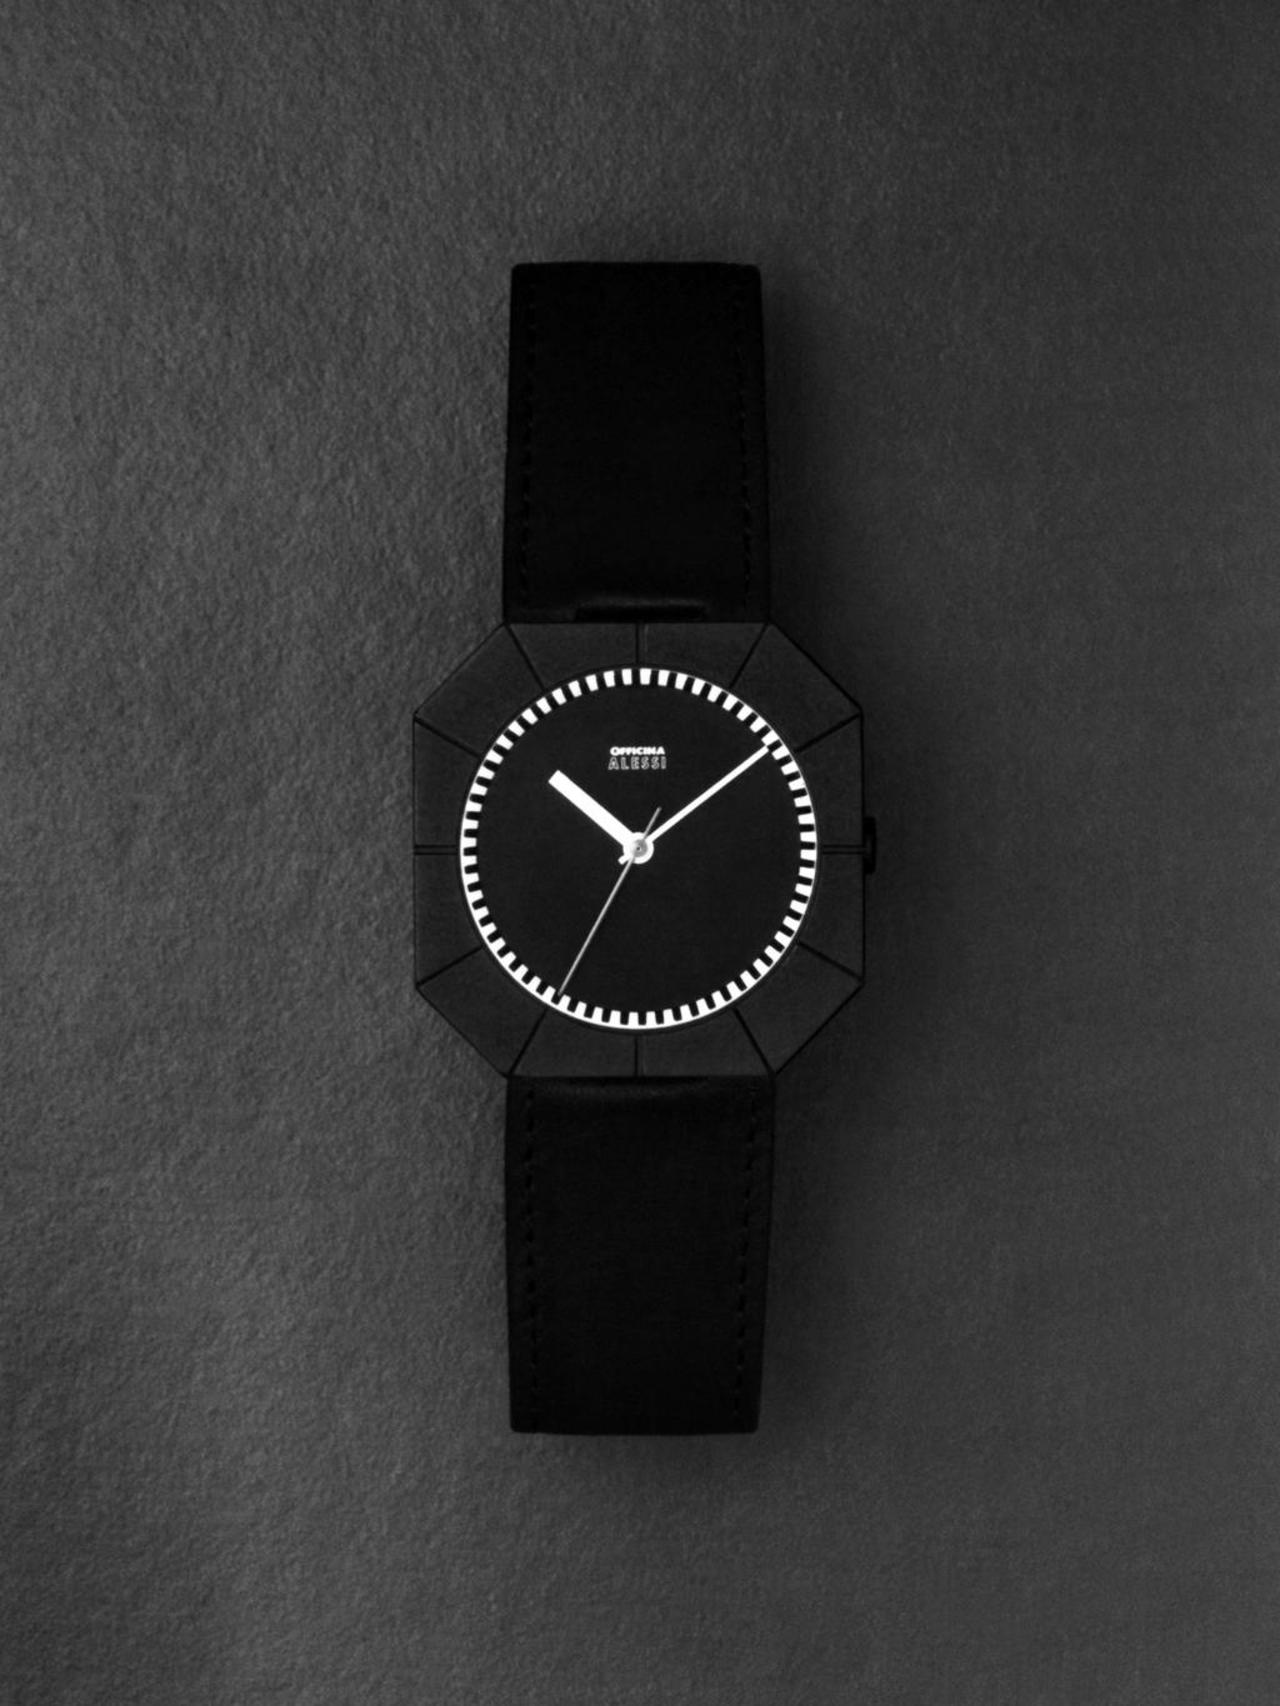 Uriuri 1988 Wrist watch Alessi by Richard Sapper